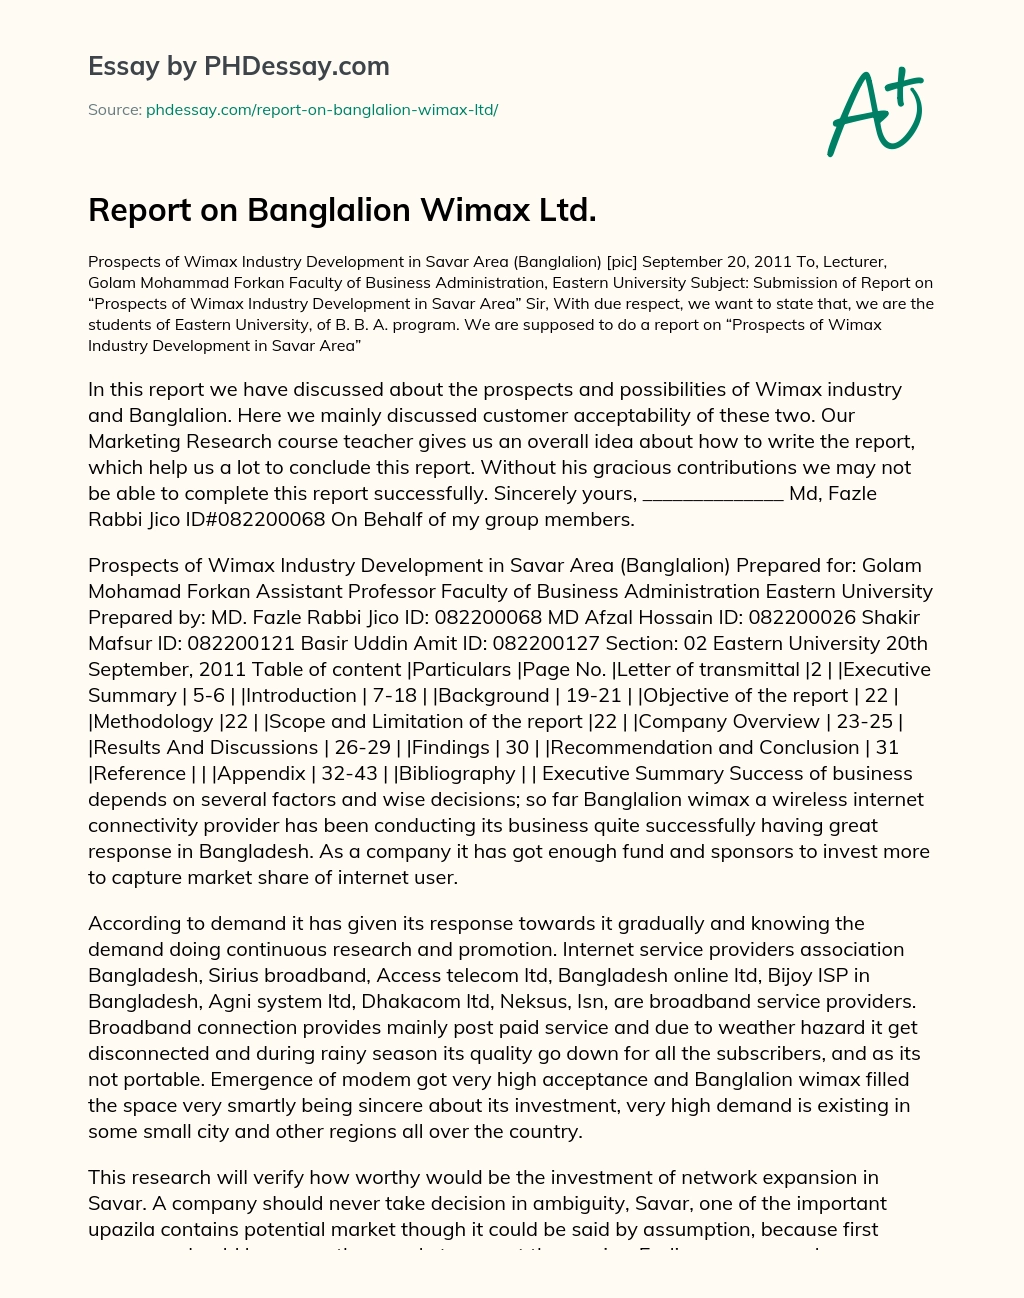 Report on Banglalion Wimax Ltd. essay